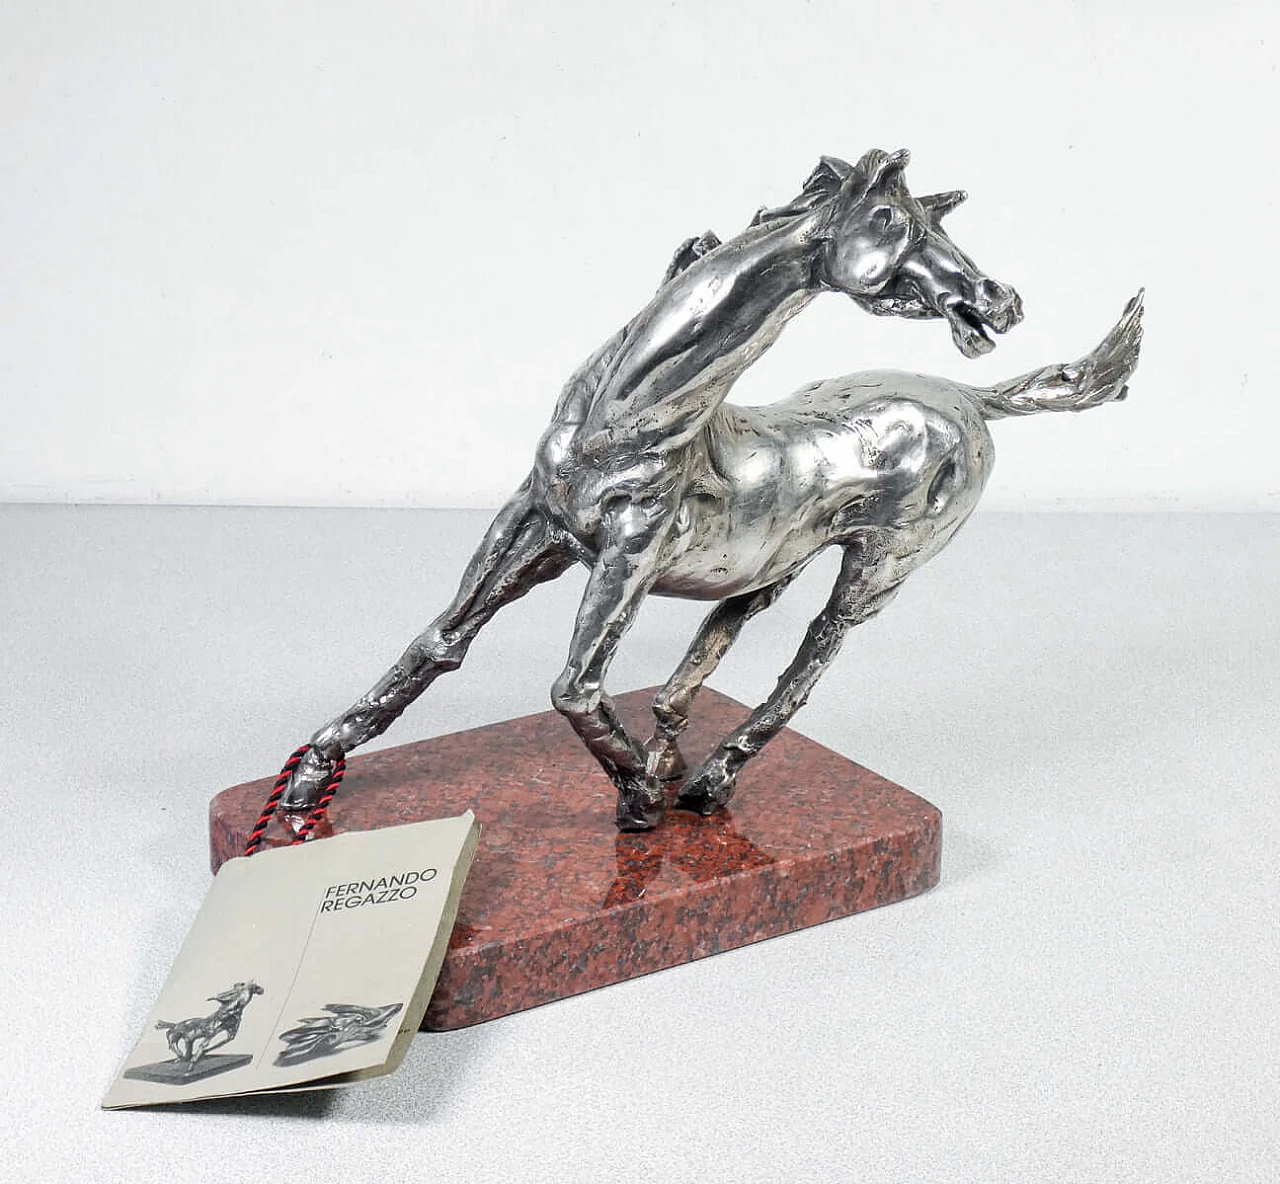 Fernando Regazzo, Running horse, metal sculpture, 1986 1